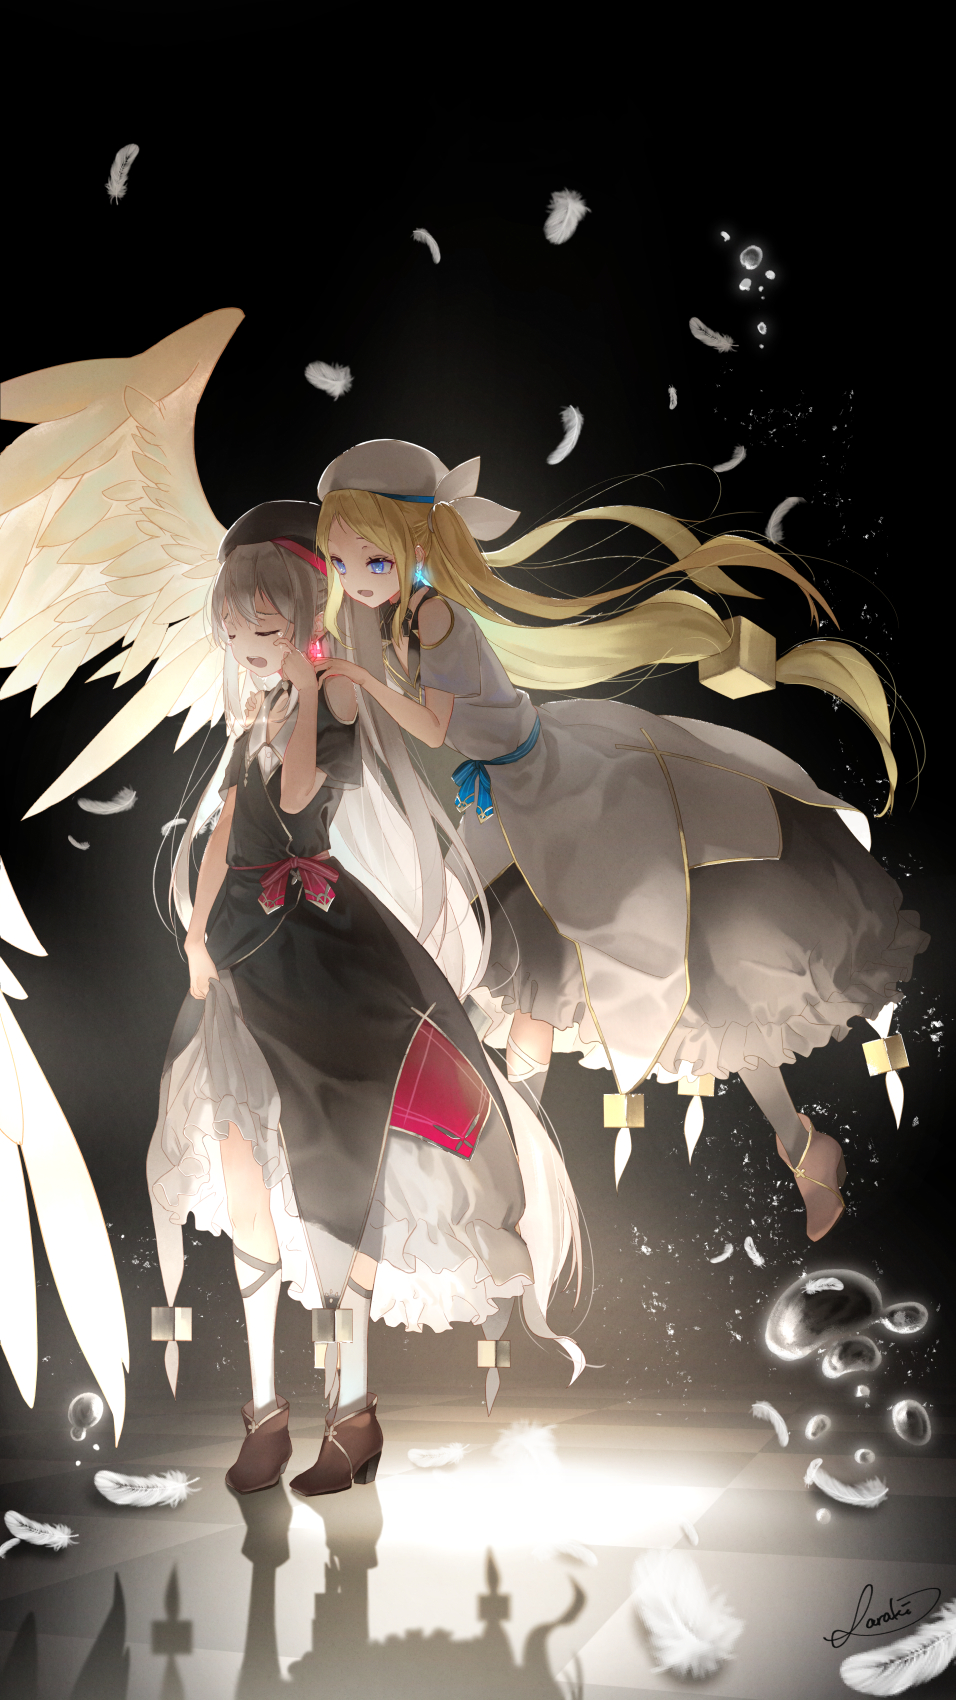 Anime 956x1700 anime anime girls digital art artwork 2D portrait display Saraki dress wings tears blonde silver hair